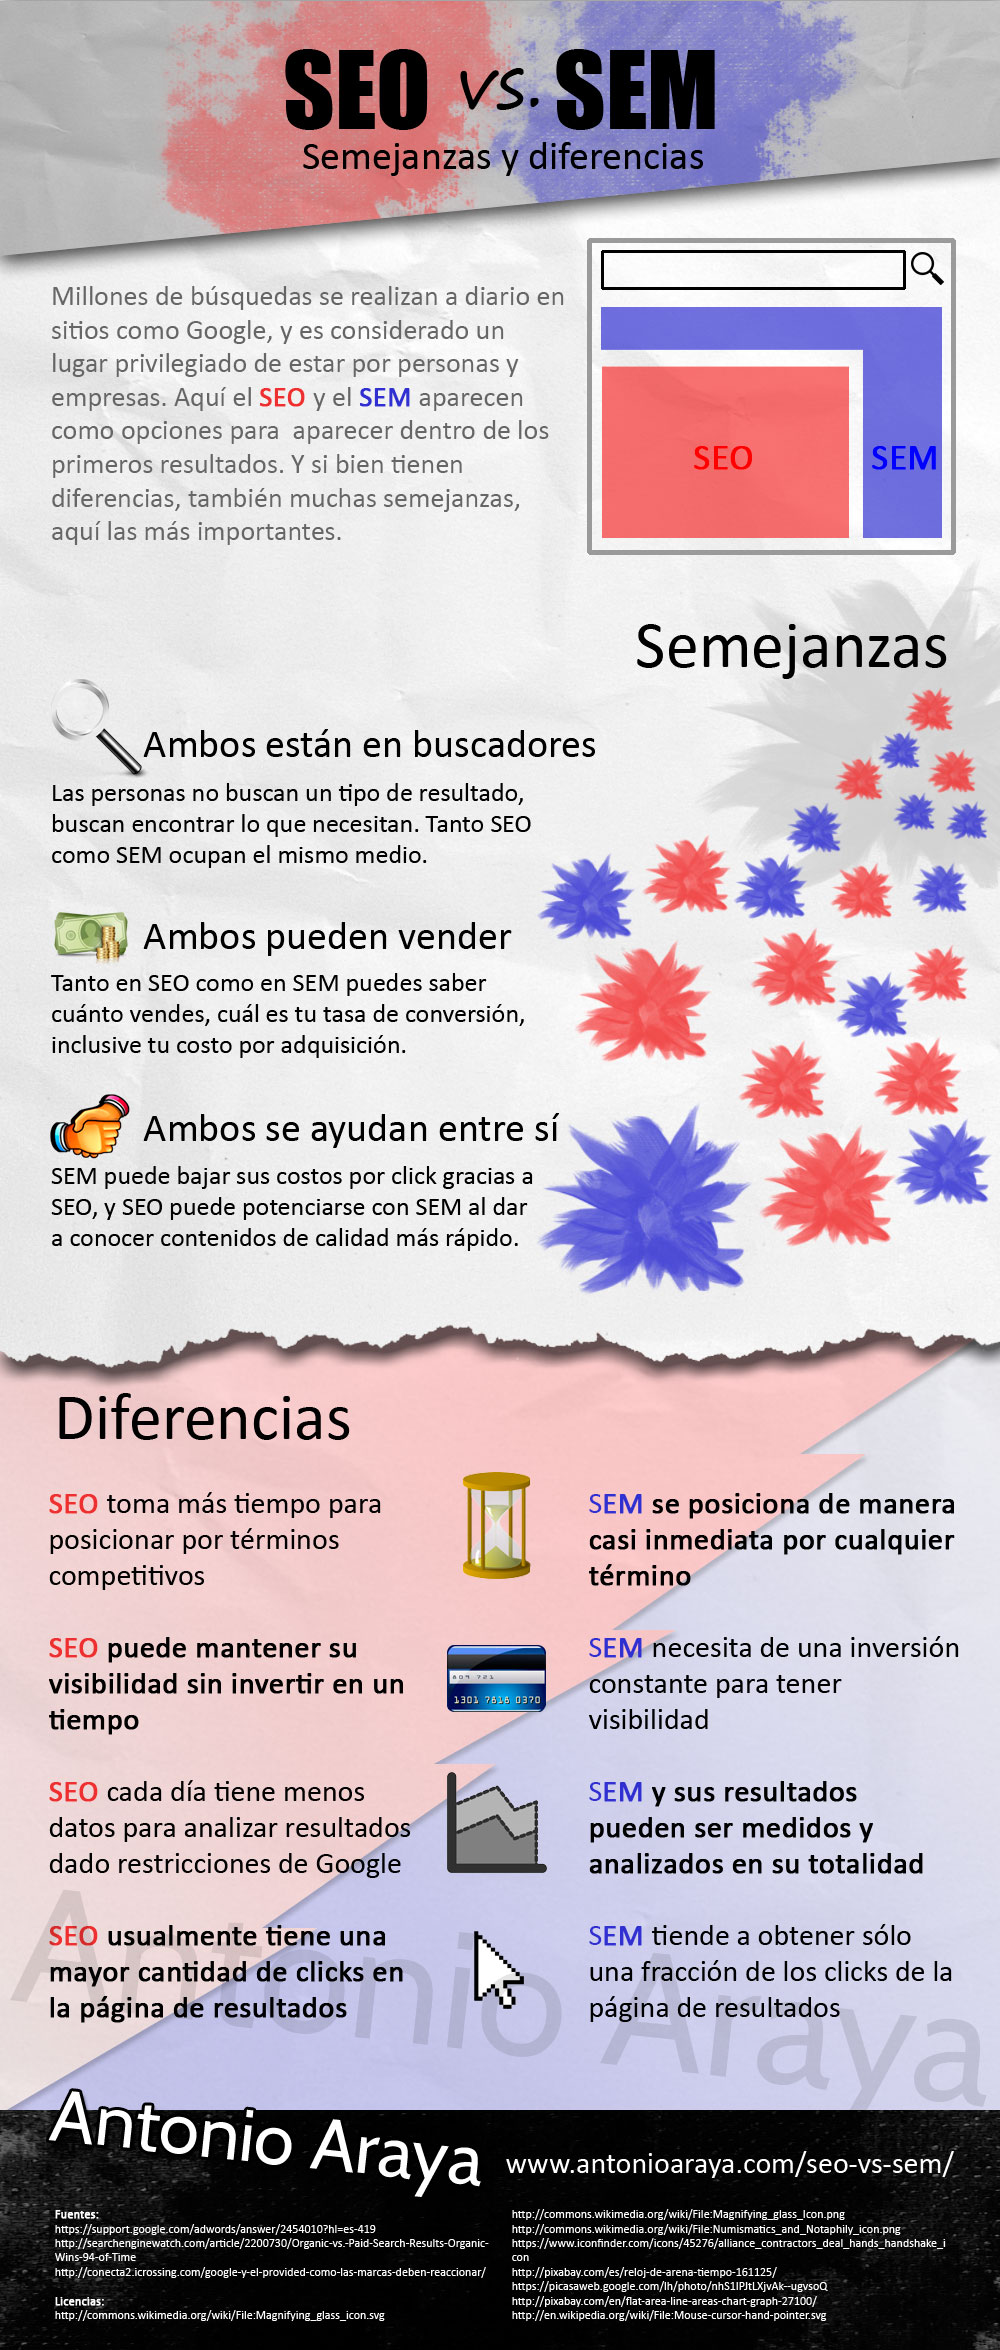 SEO vs SEM: semejanzas y diferencias infografia infographic seo